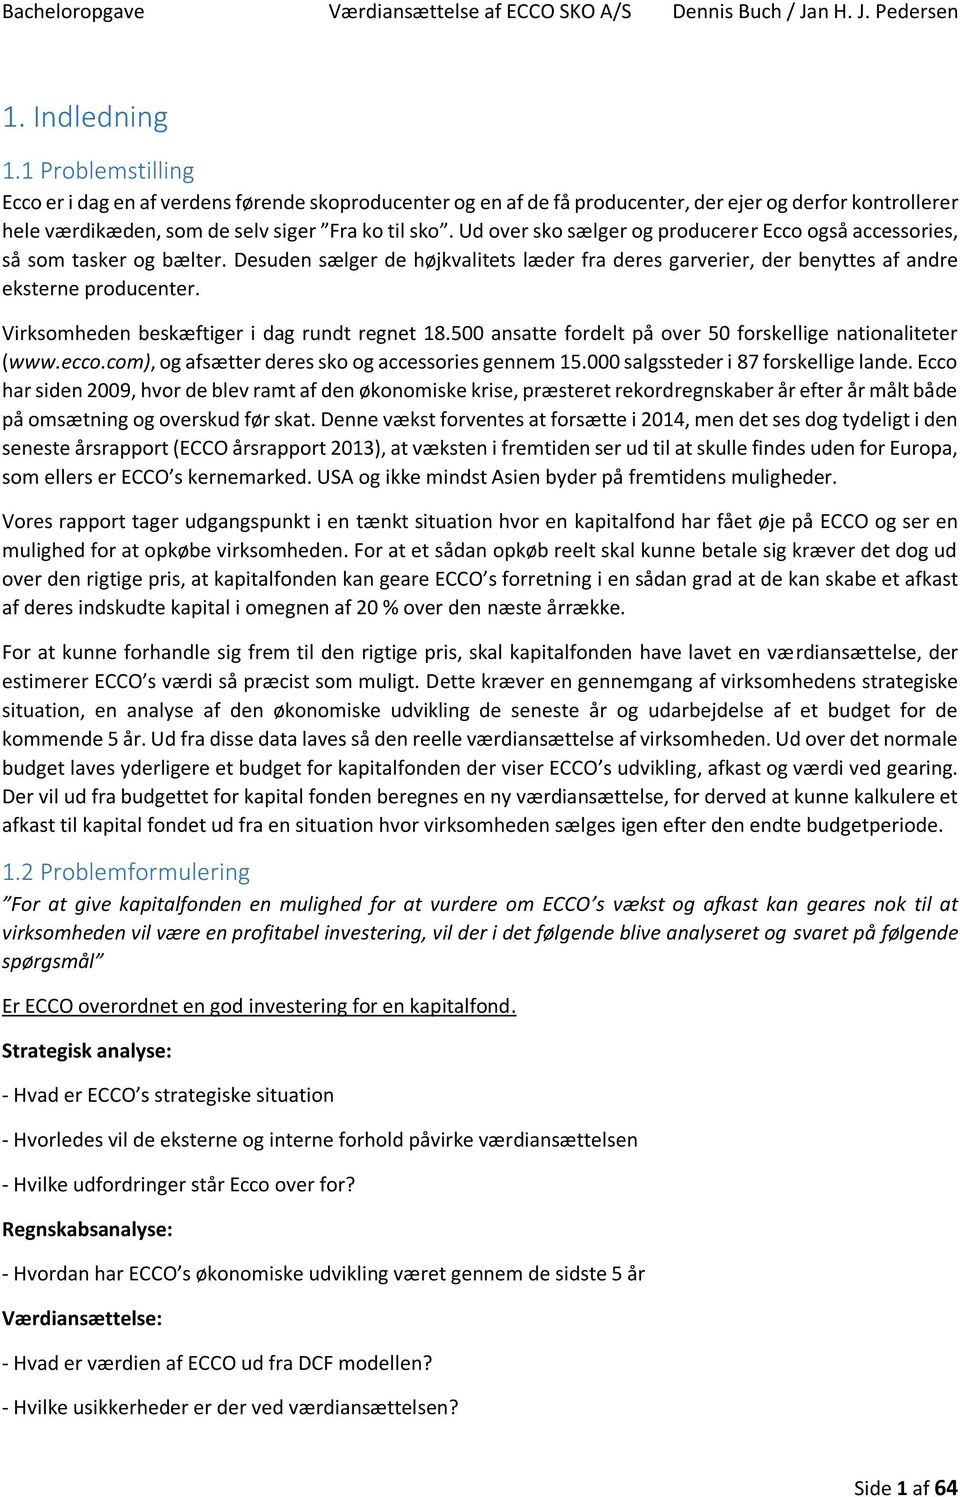 Transistor hav det sjovt Styrke A valuation of the Danish shoe company ECCO SKO A/S - PDF Gratis download